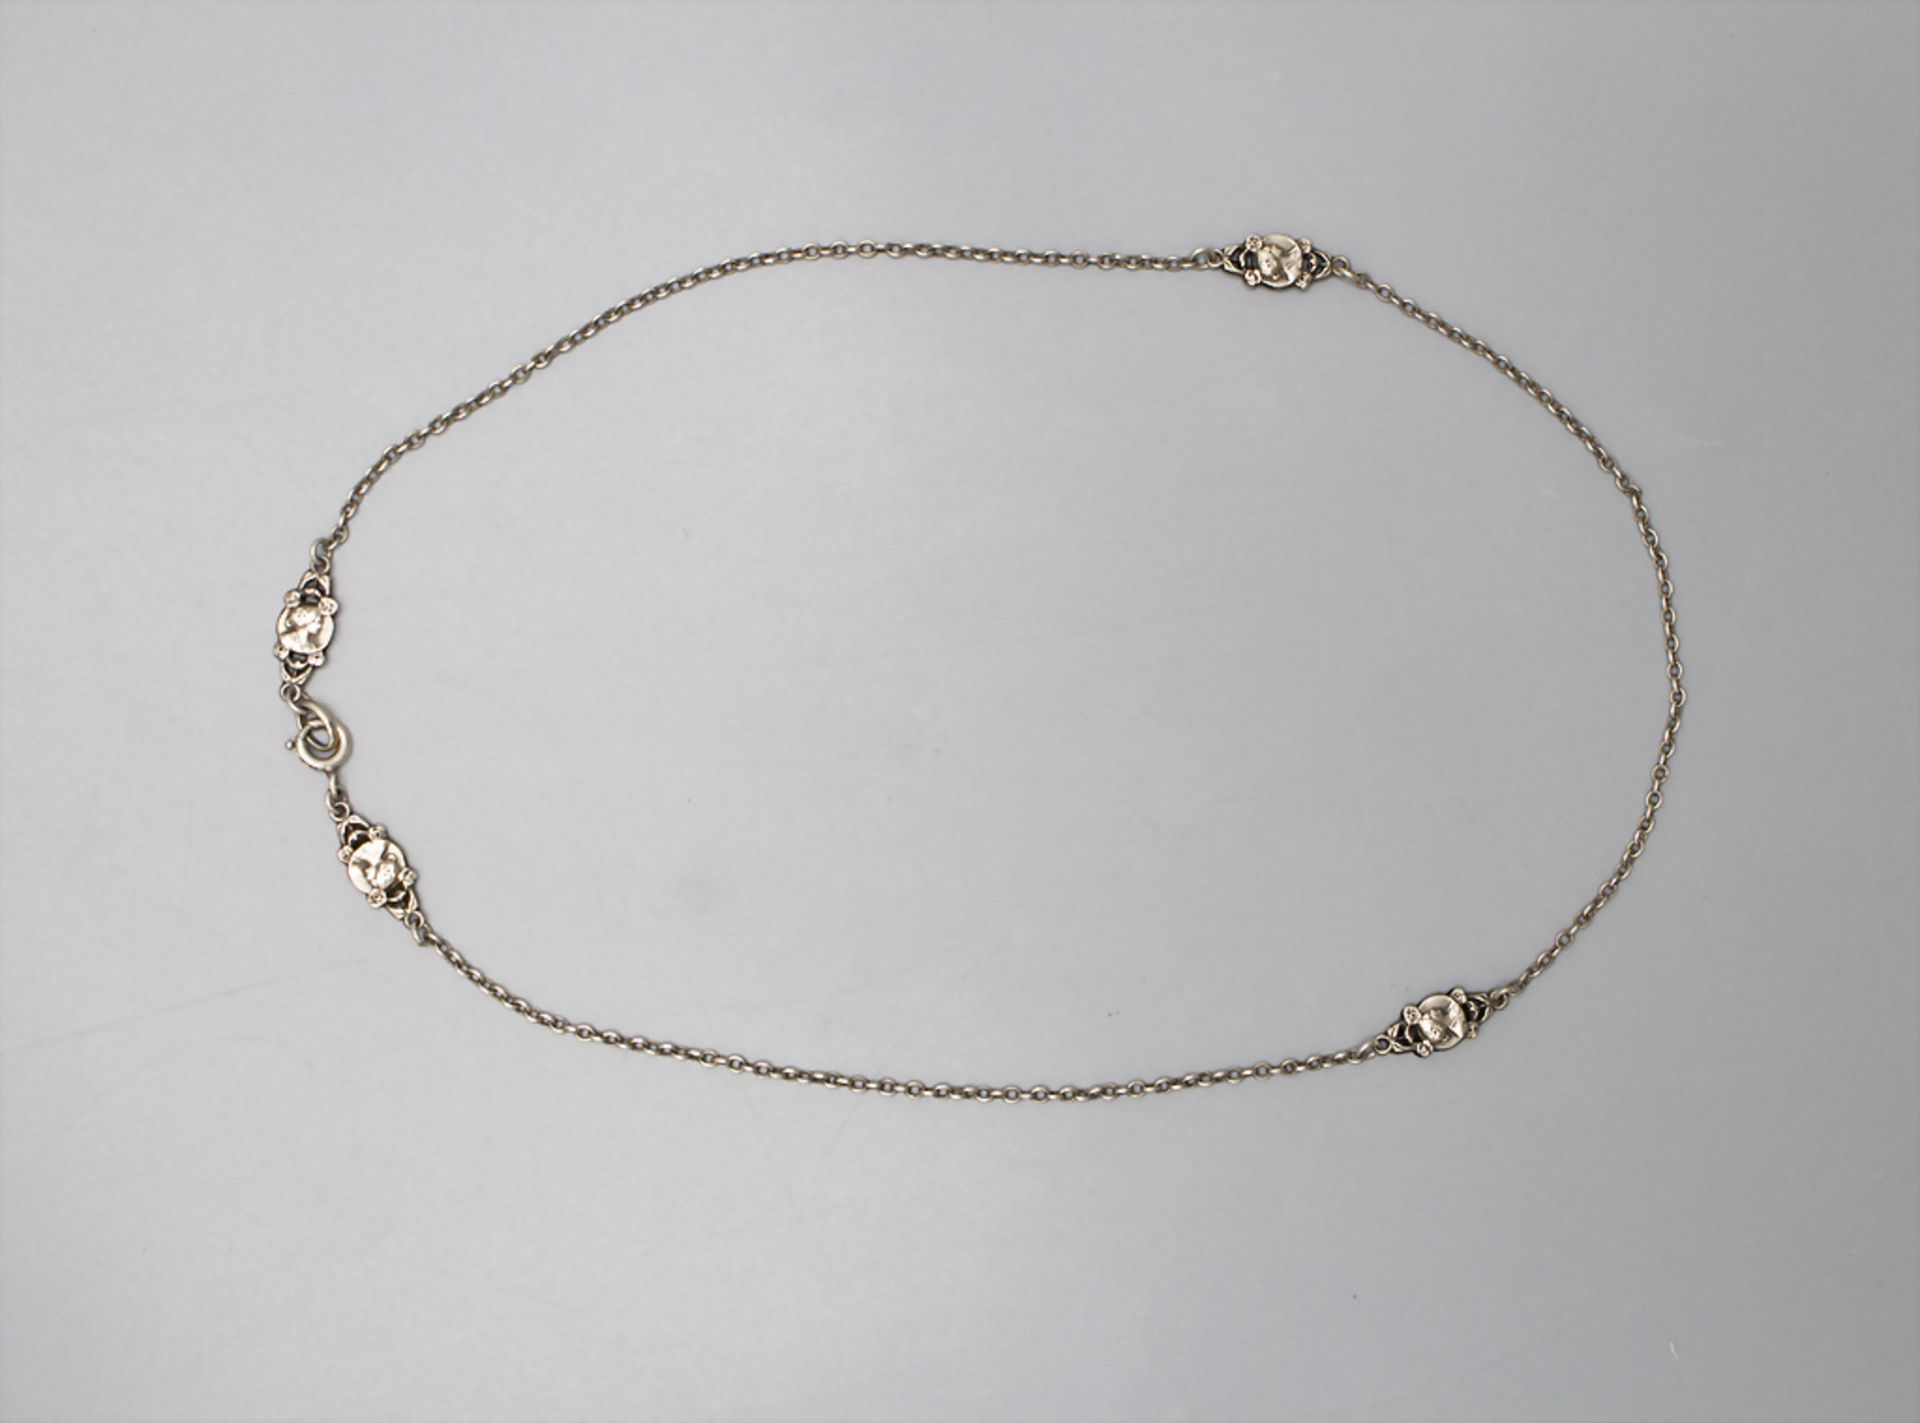 Jugendstil Silberkette mit 4 Medaillons / An Art Nouveau silver necklace with 4 medallions, ... - Image 2 of 4